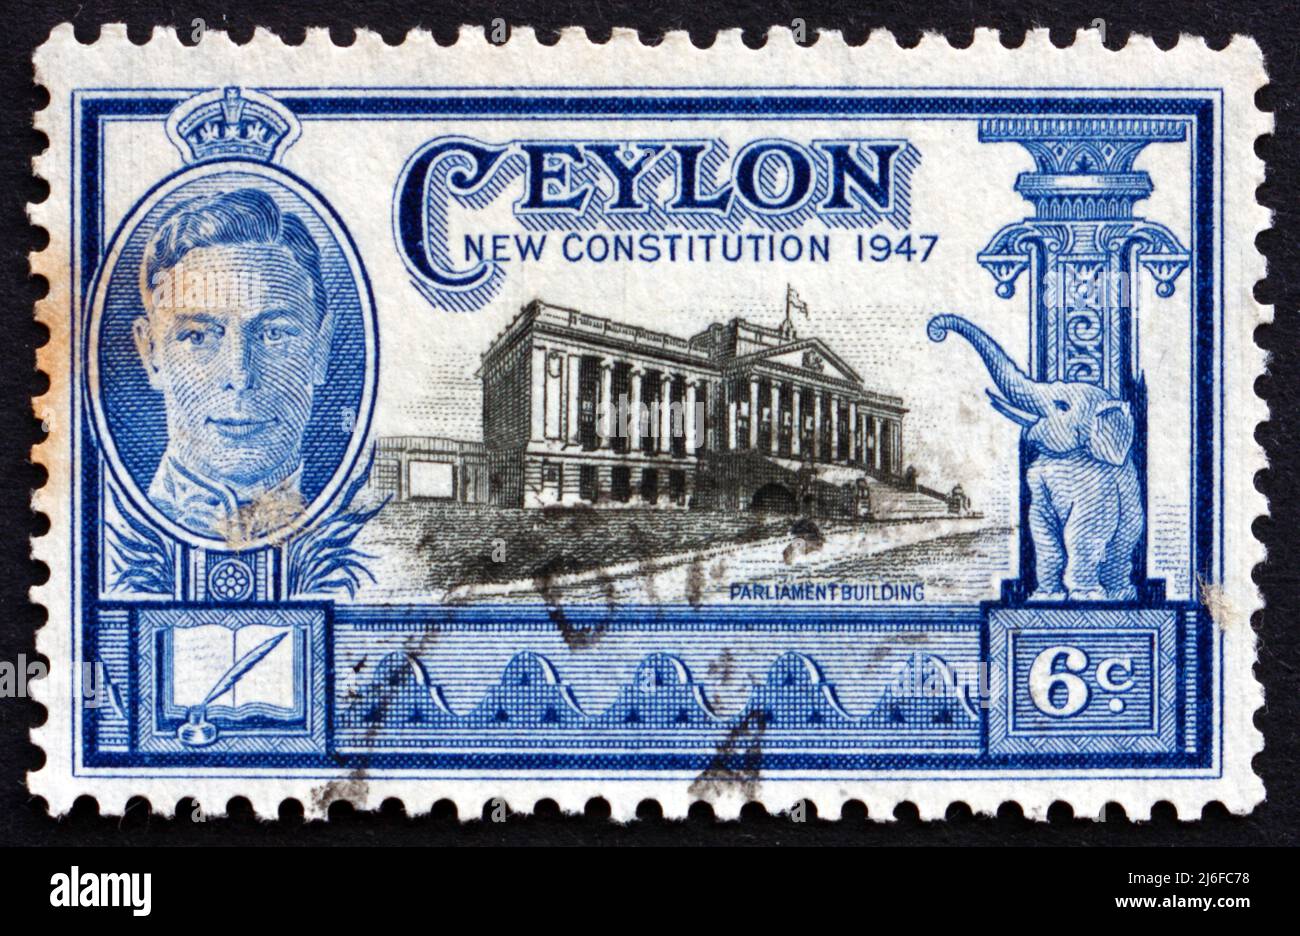 SRI LANKA - CIRCA 19547 a stamp printed in Sri Lanka shows Parliament Building, Colombo, circa 1947 Stock Photo